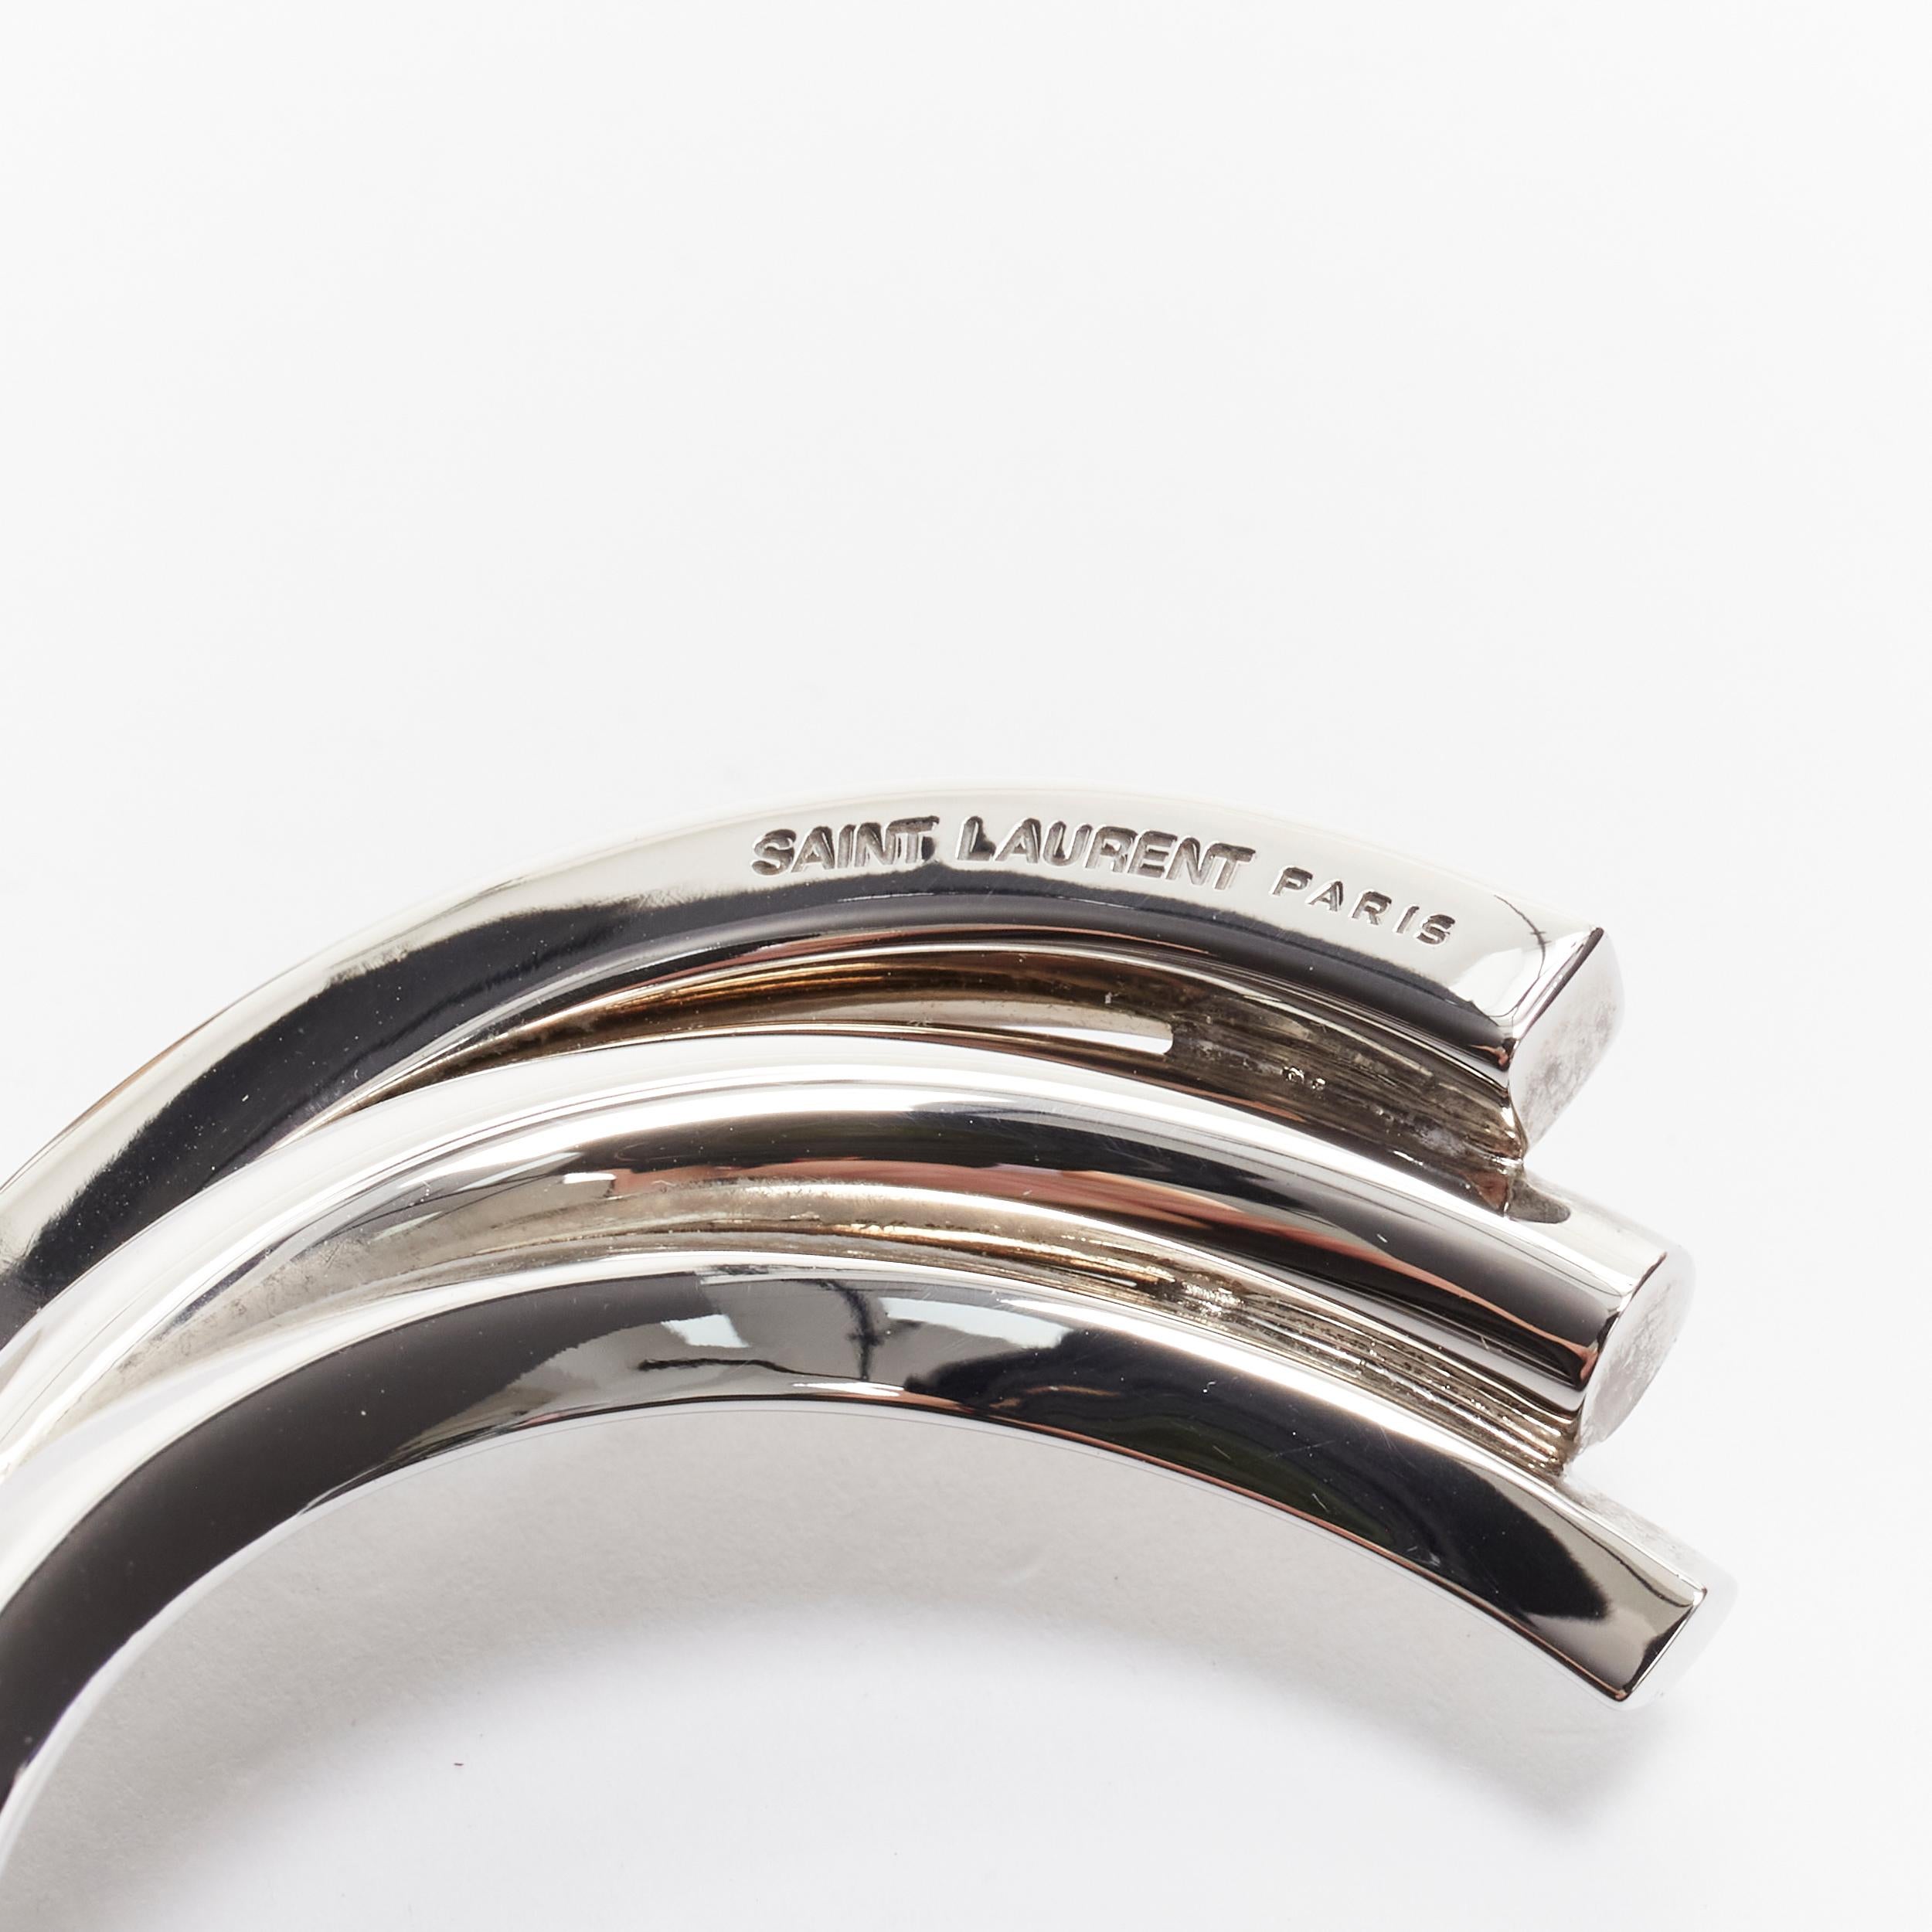 SAINT LAURENT Hedi Slimane silver brass architectural triple twist cuff bracelet For Sale 5